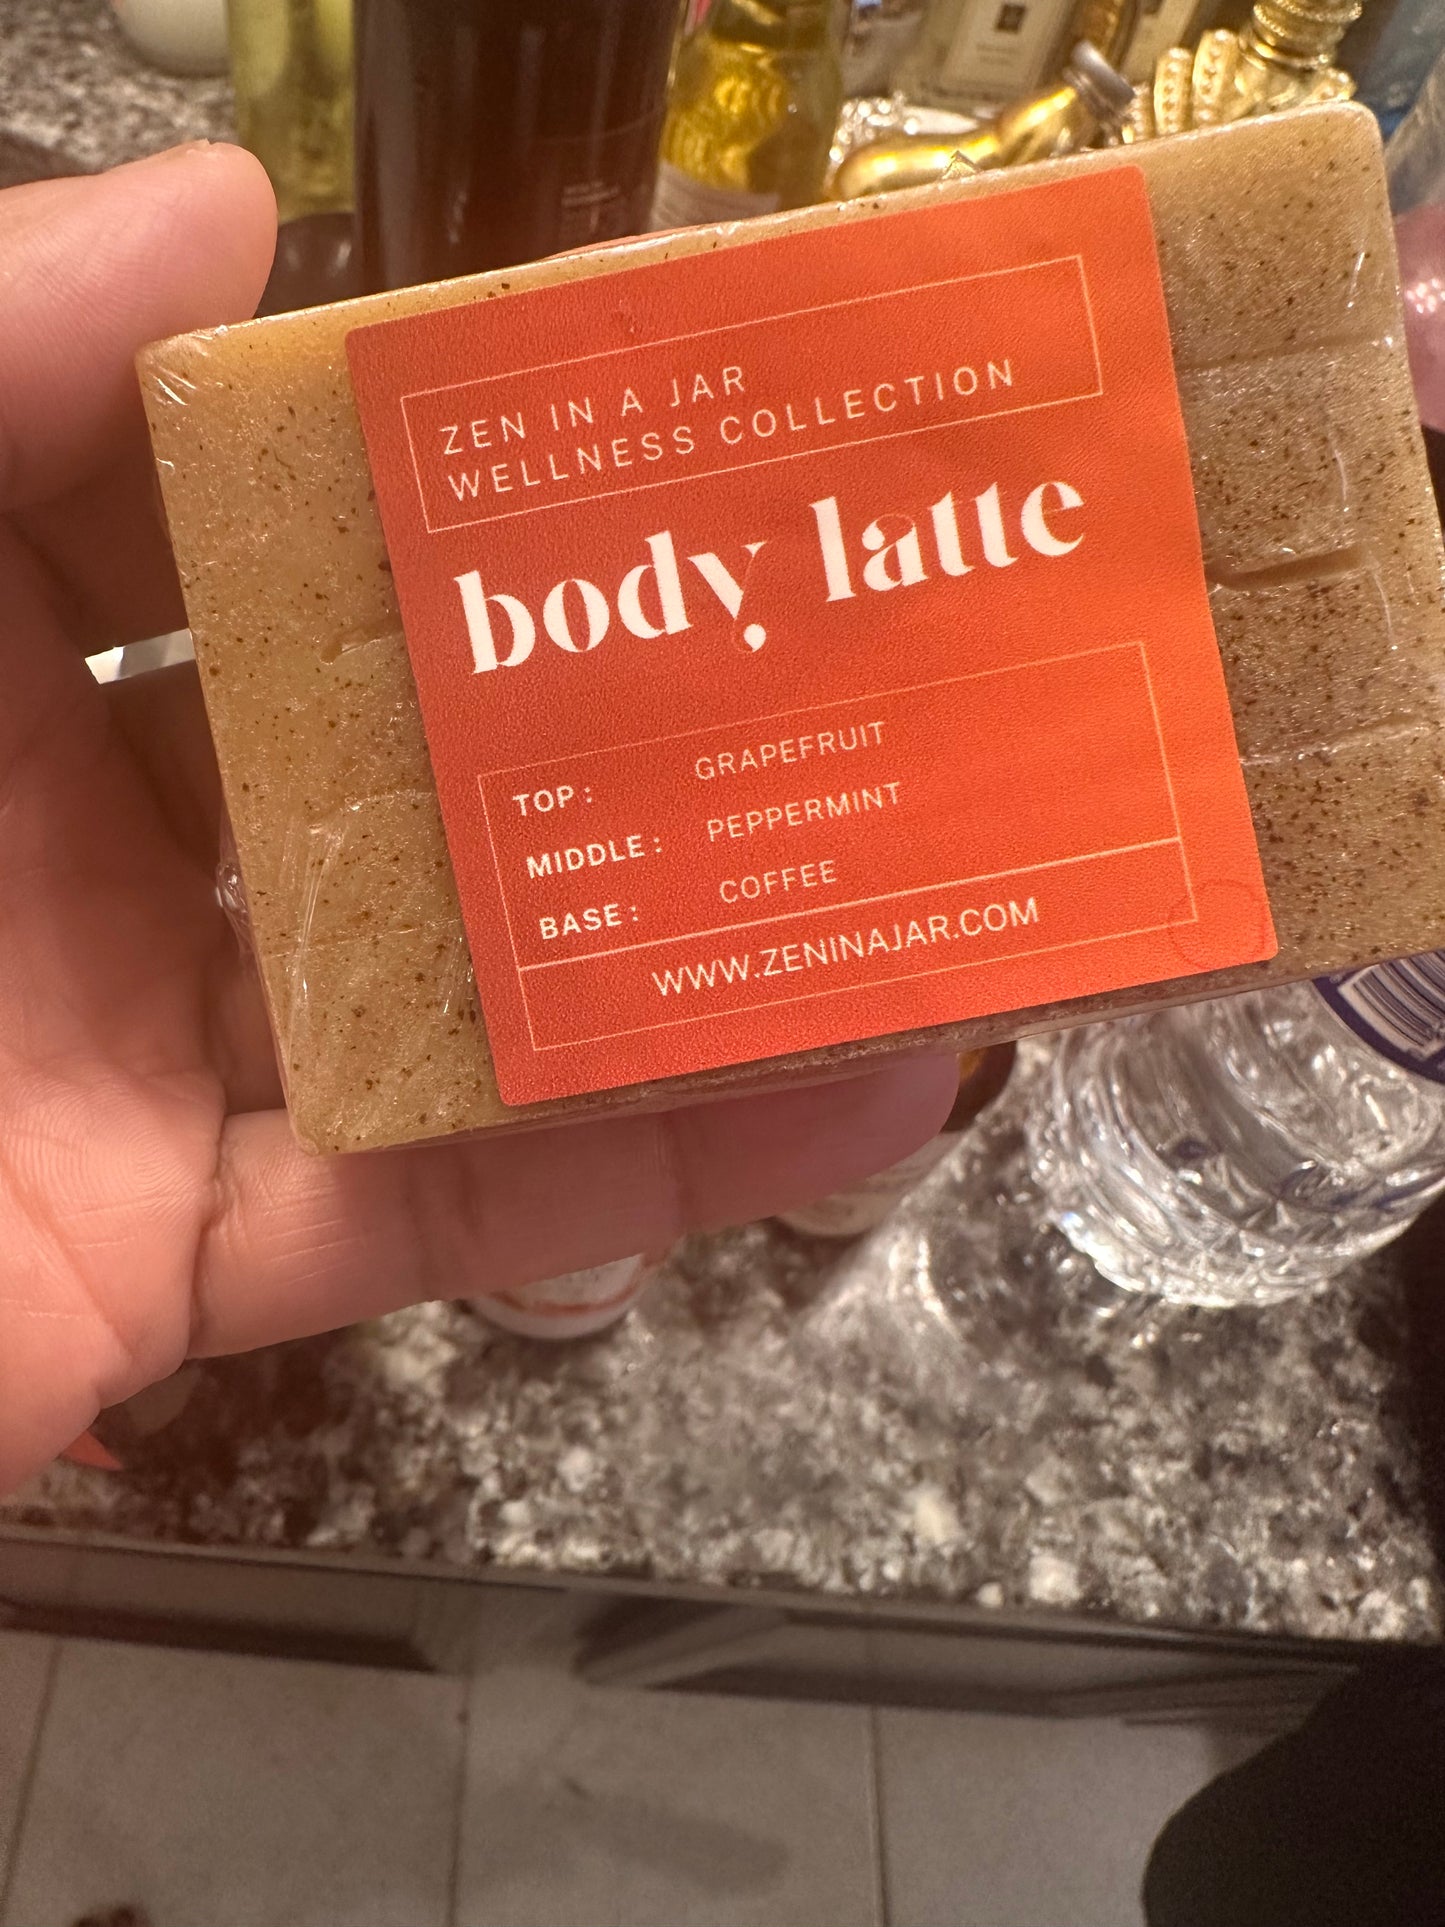 BODY LATTE (anti-cellulite collection)